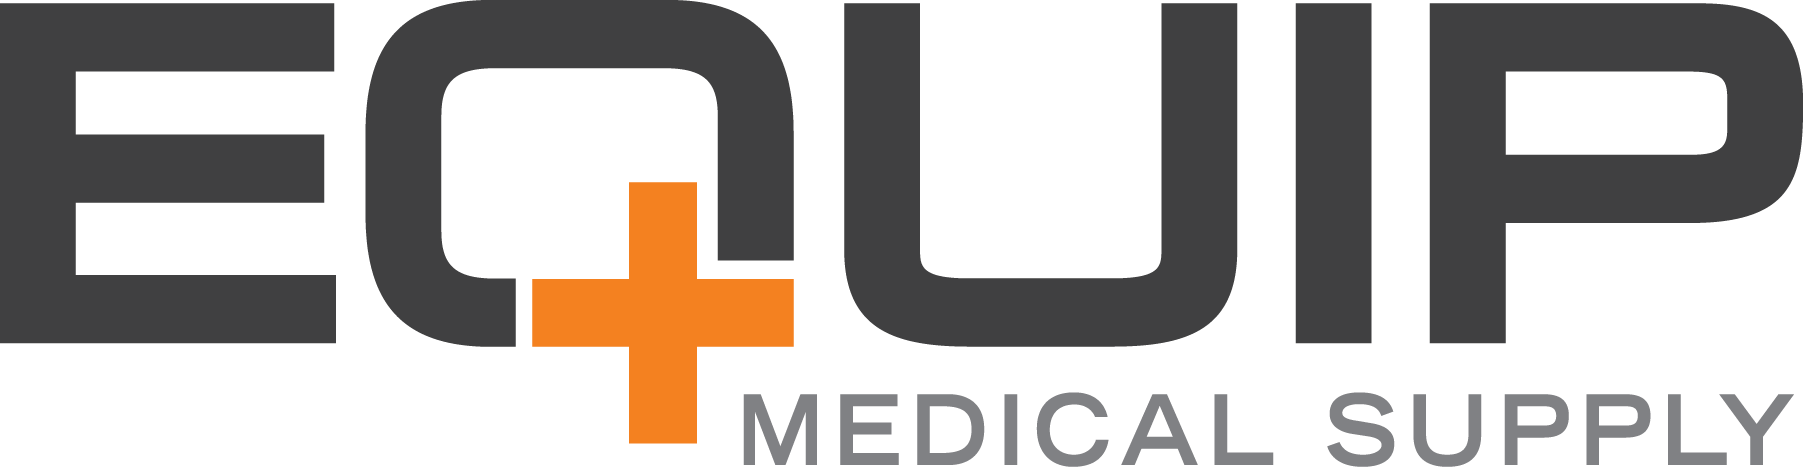 Equip Medical Supply Logo